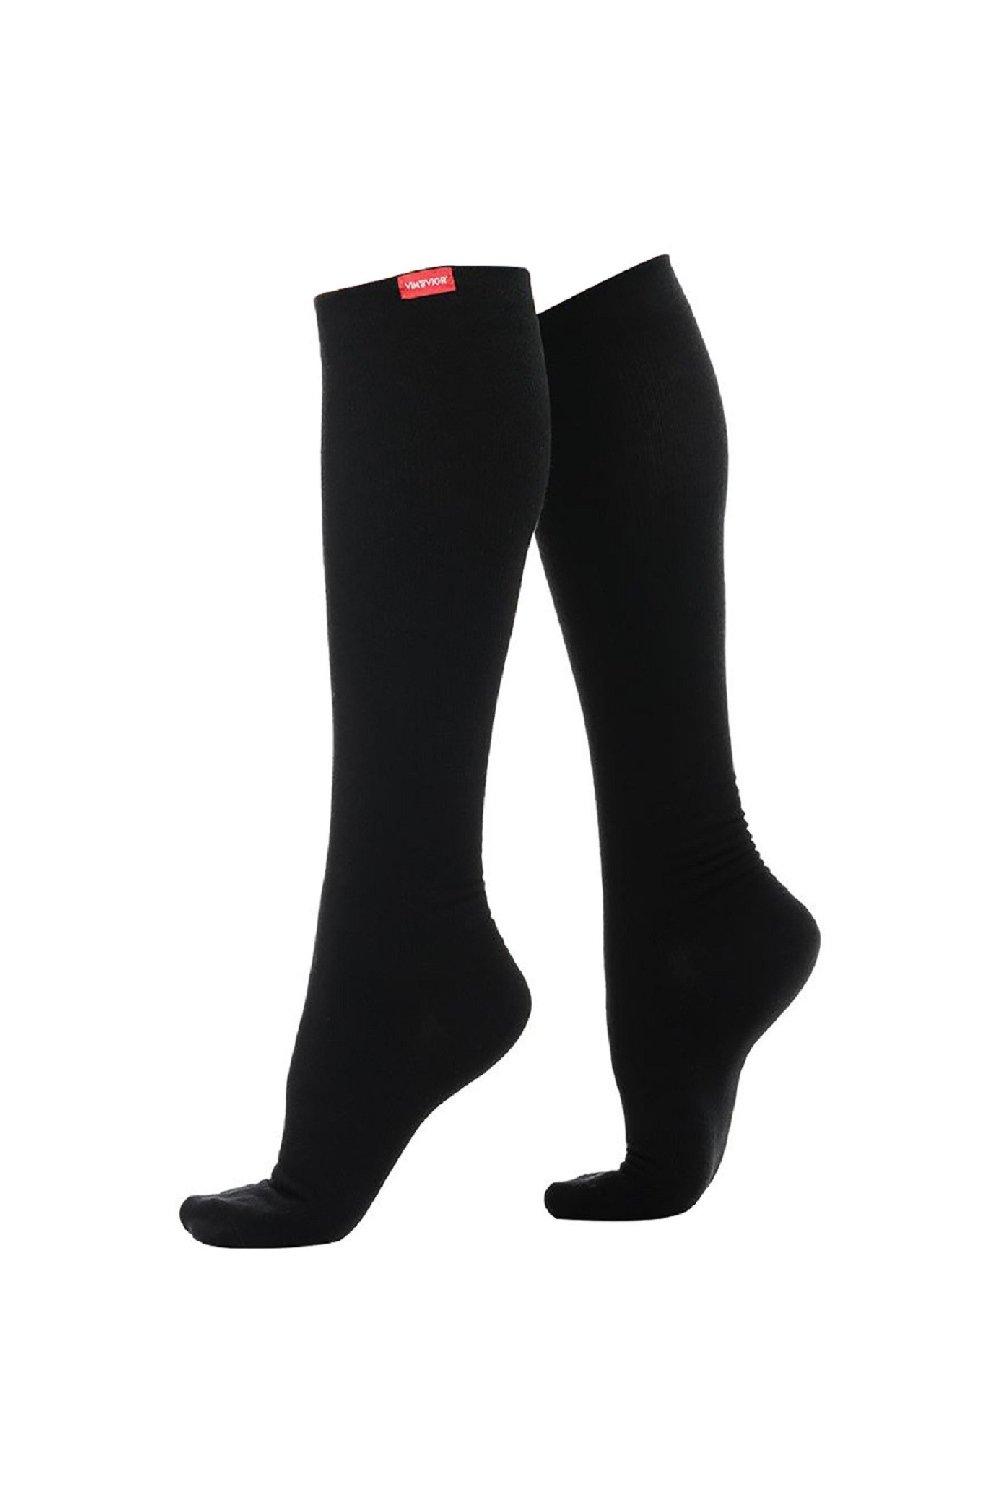 Wide Calf Graduated Compression Socks 15-20 mmhg with Merino Wool